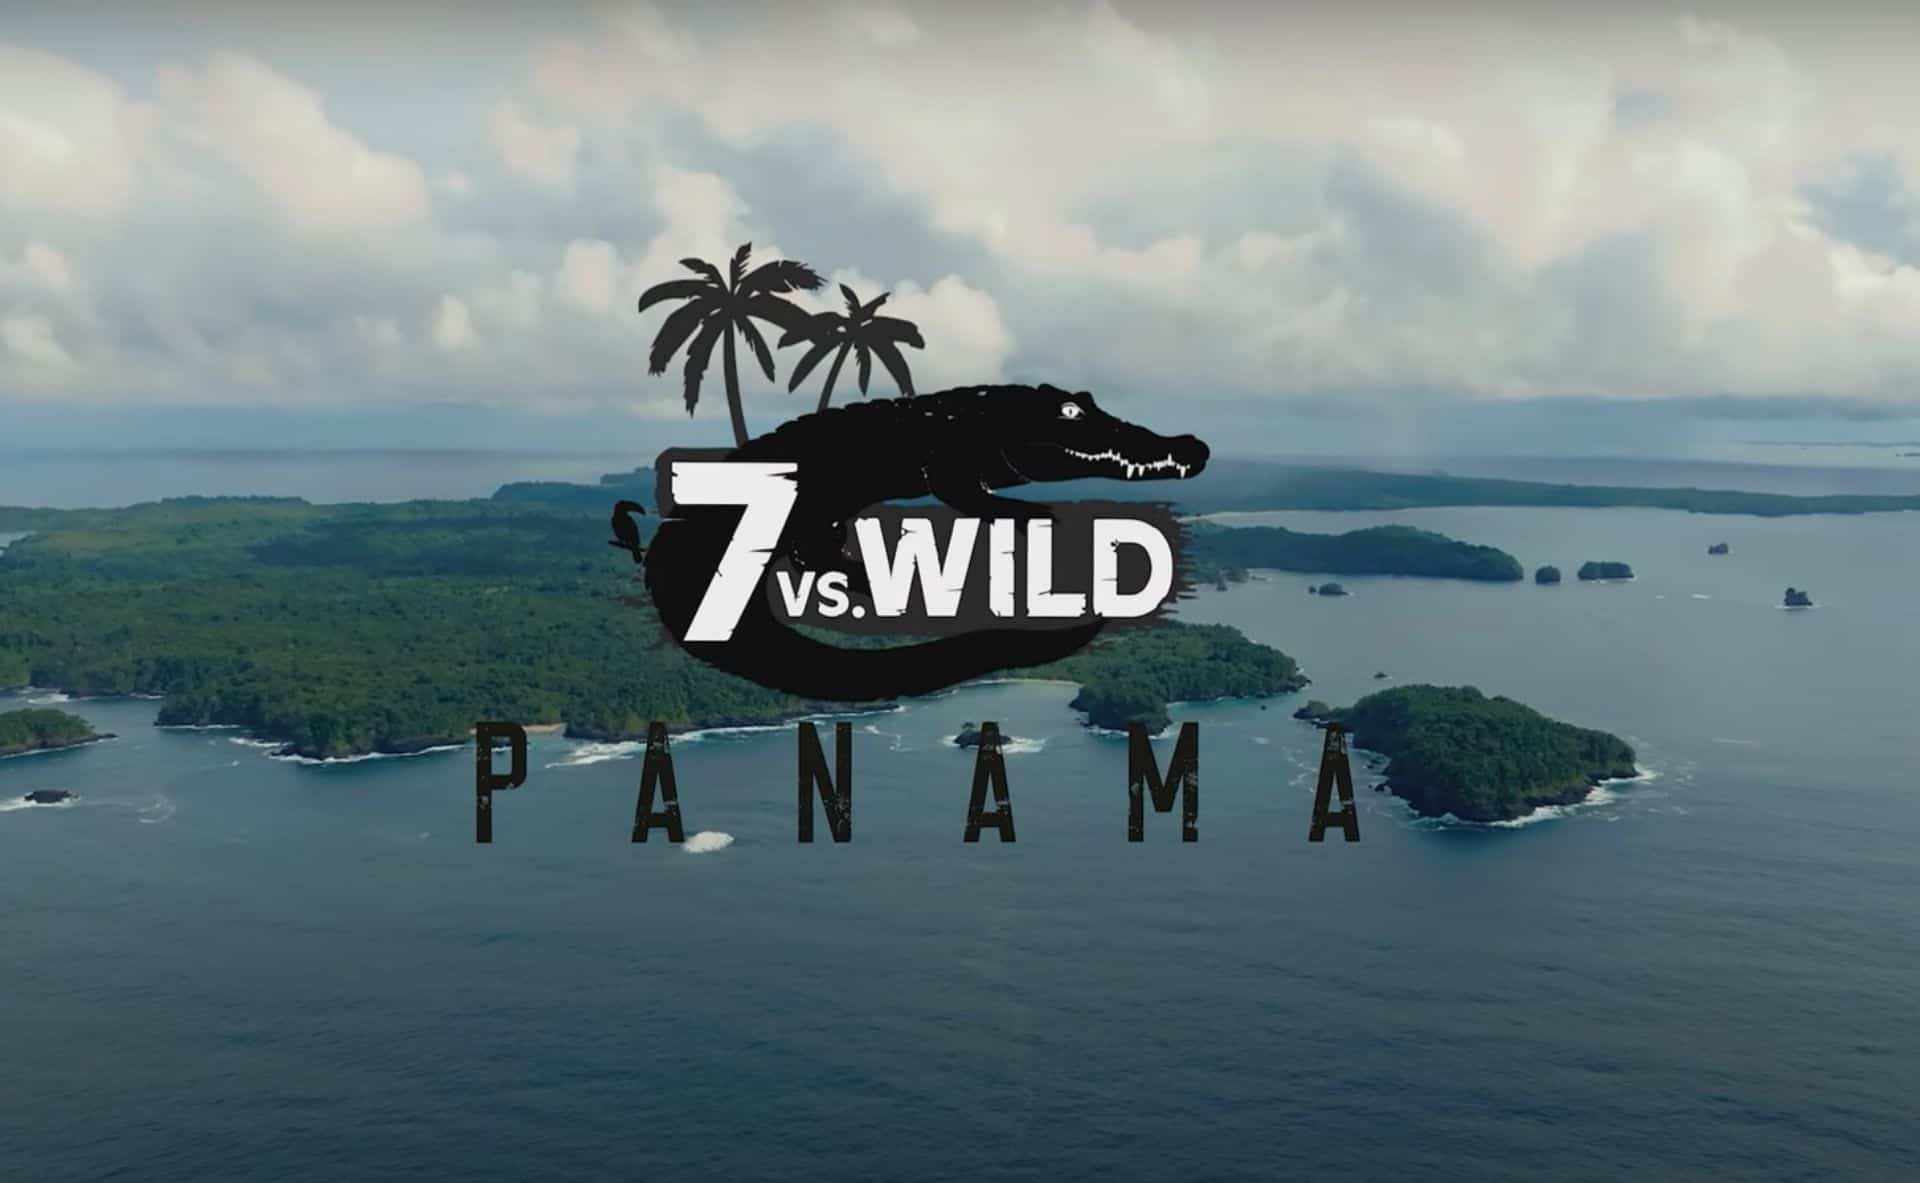 7 vs. Wild Panama Folge 1: Survival Reality Show gestartet